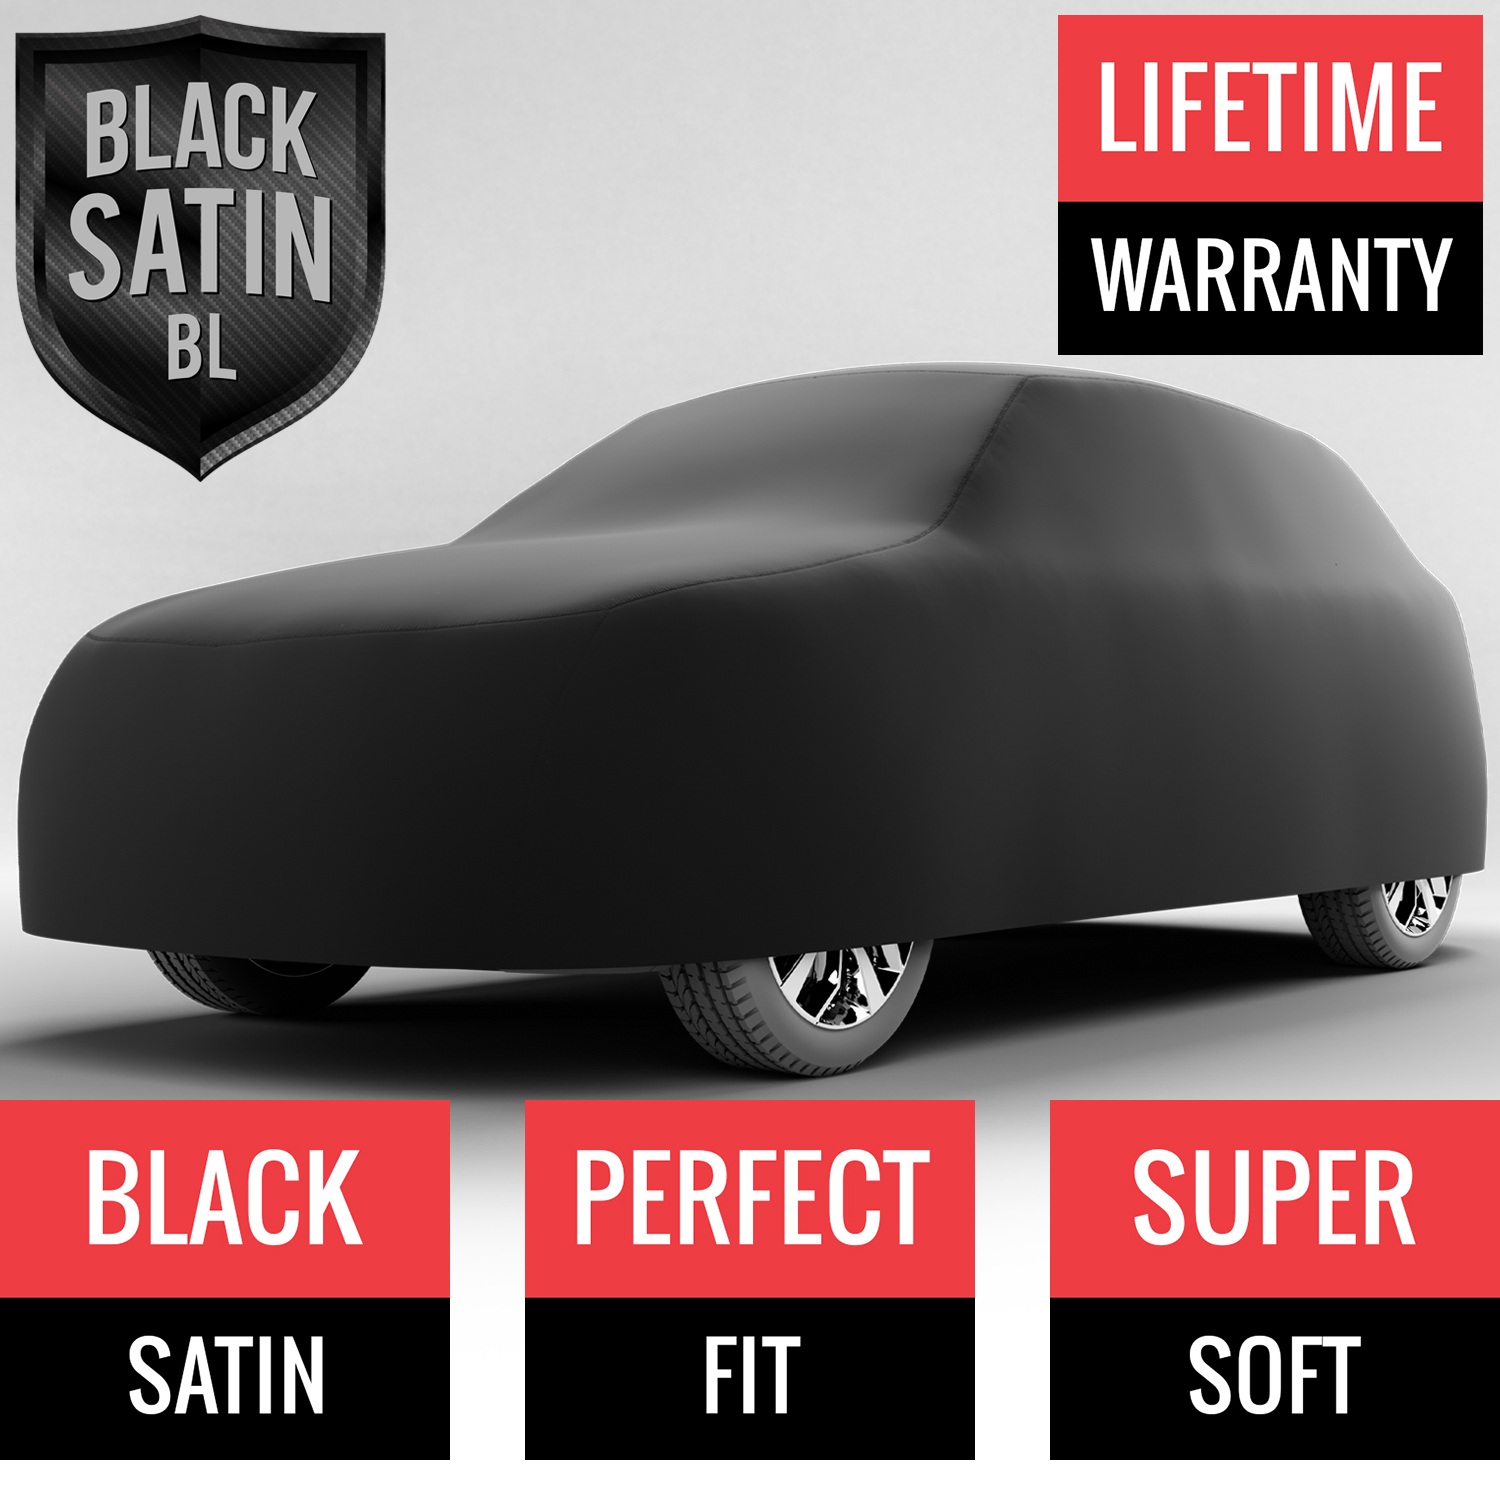 Black Satin BL - Black Car Cover for Scion xB 2013 Wagon 4-Door